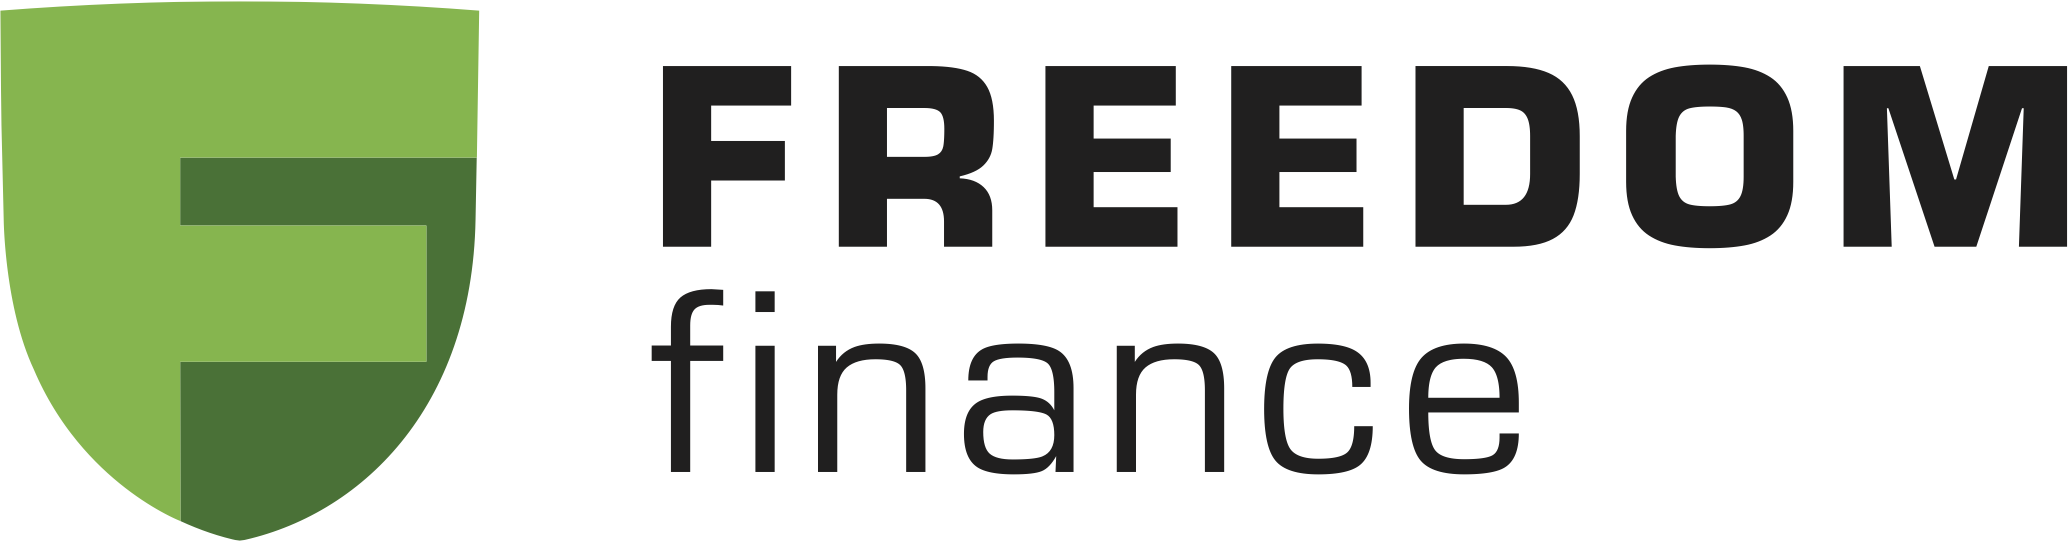 FREEDOM finance